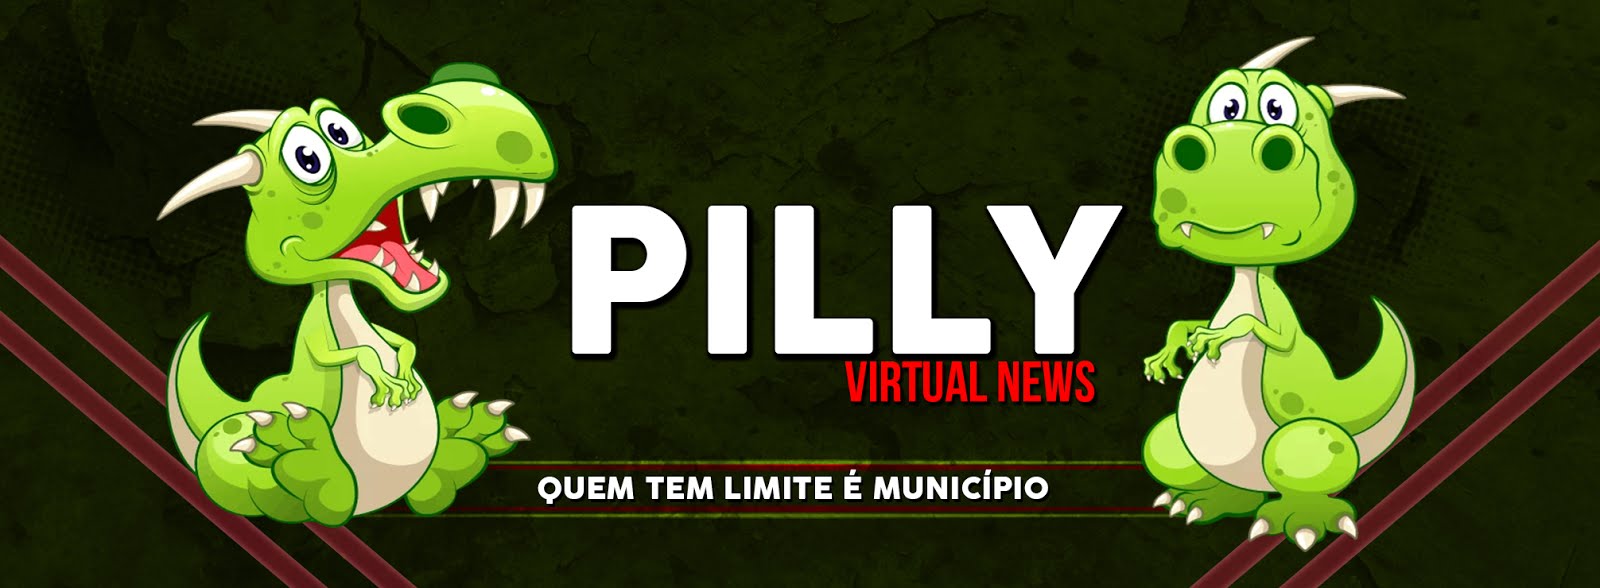 Pilly Virtual News